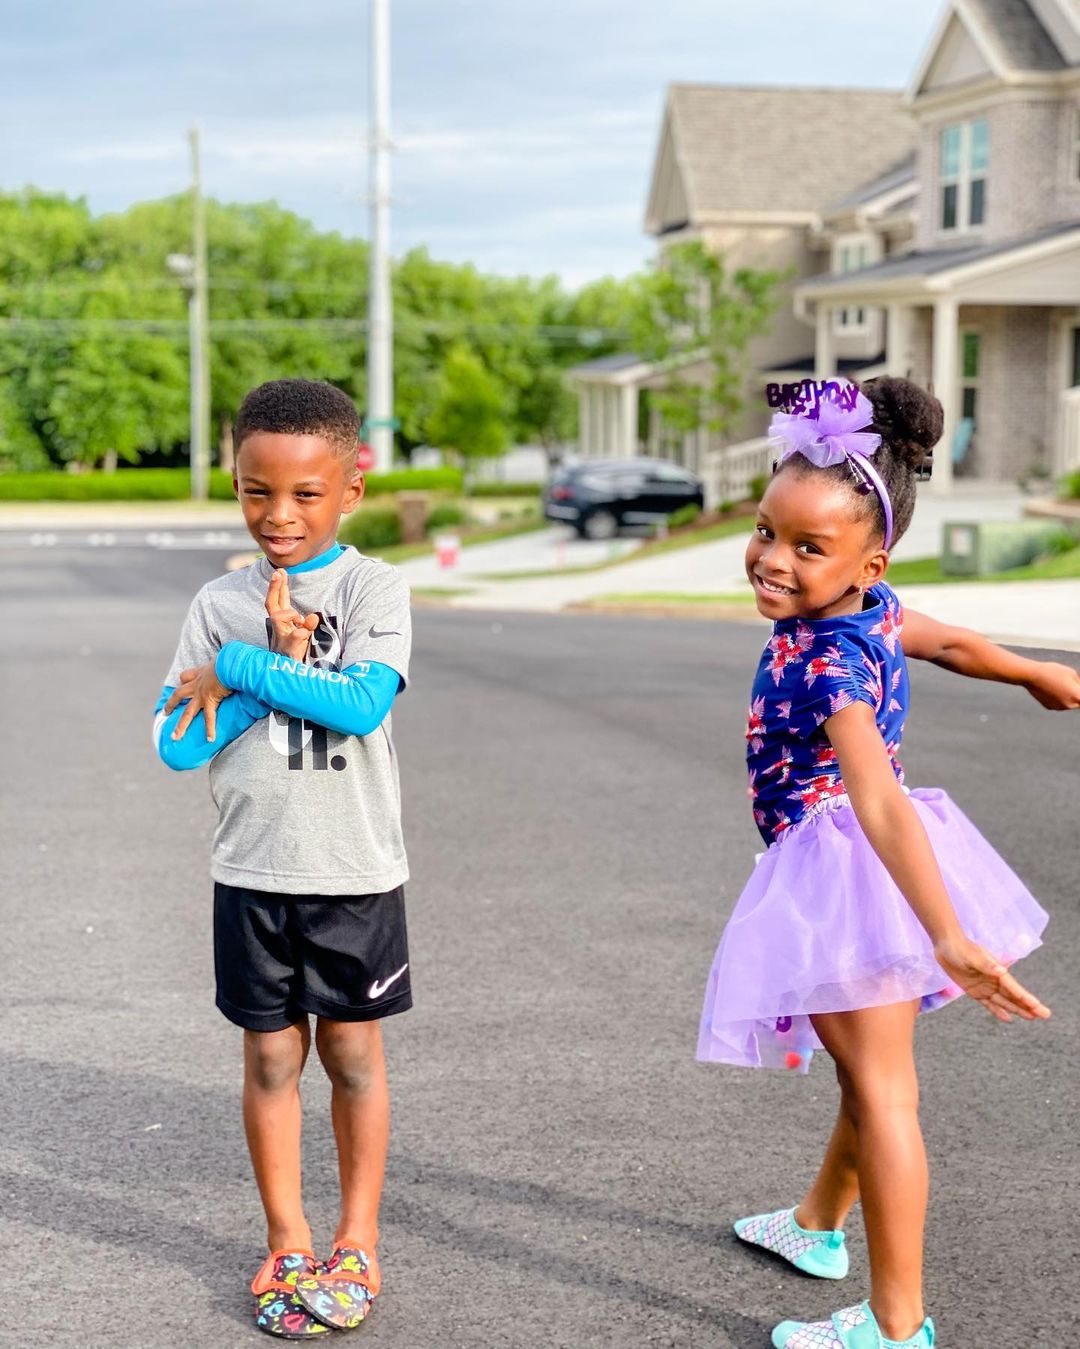 Paul Okoye, Wife Celebrate Their Twins On Their Fourth Birthday